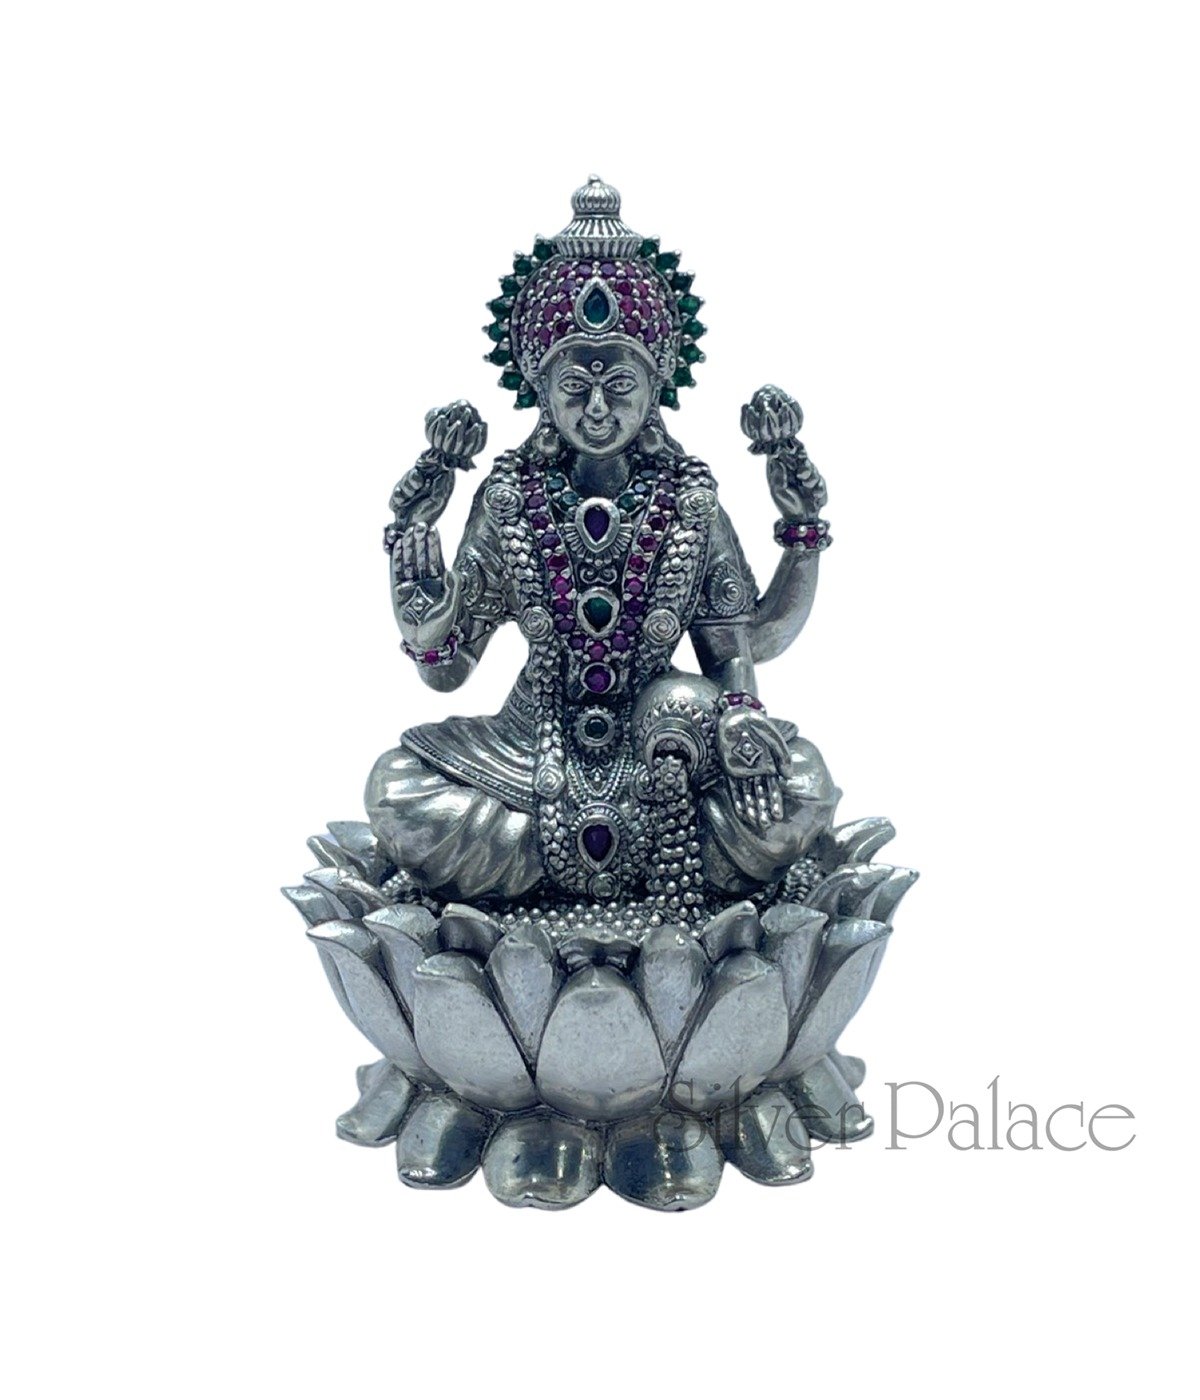 92.5 Oxidised Silver Lakshmi Idol With Stones On Lotus - Silver Palace